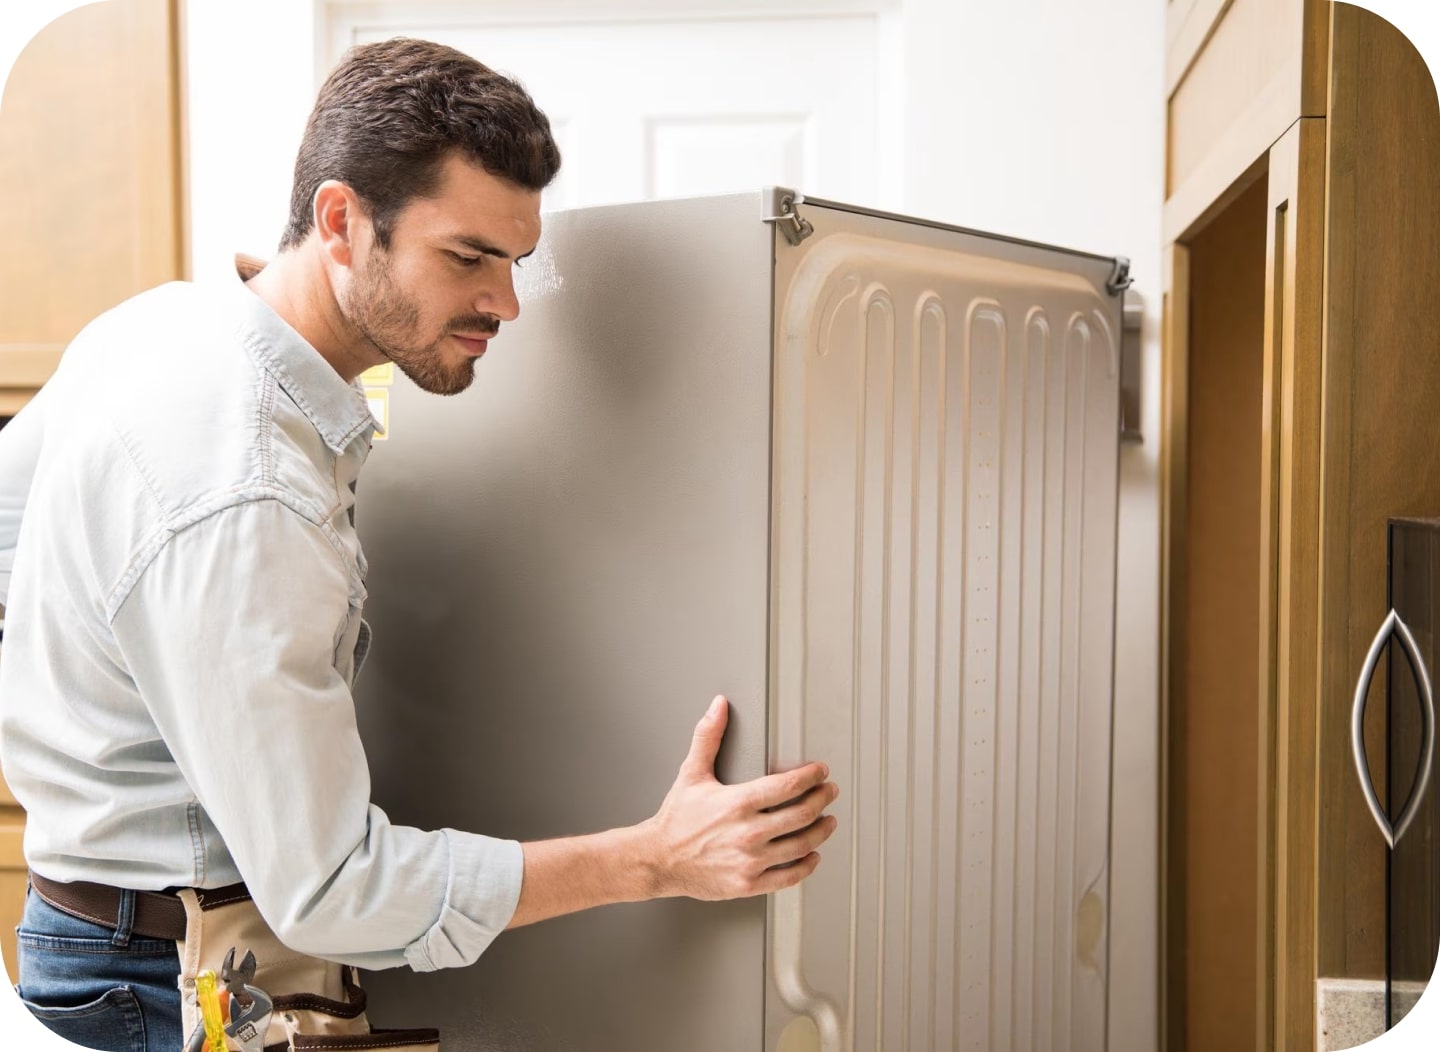 Refrigerator Repair in Charlotte